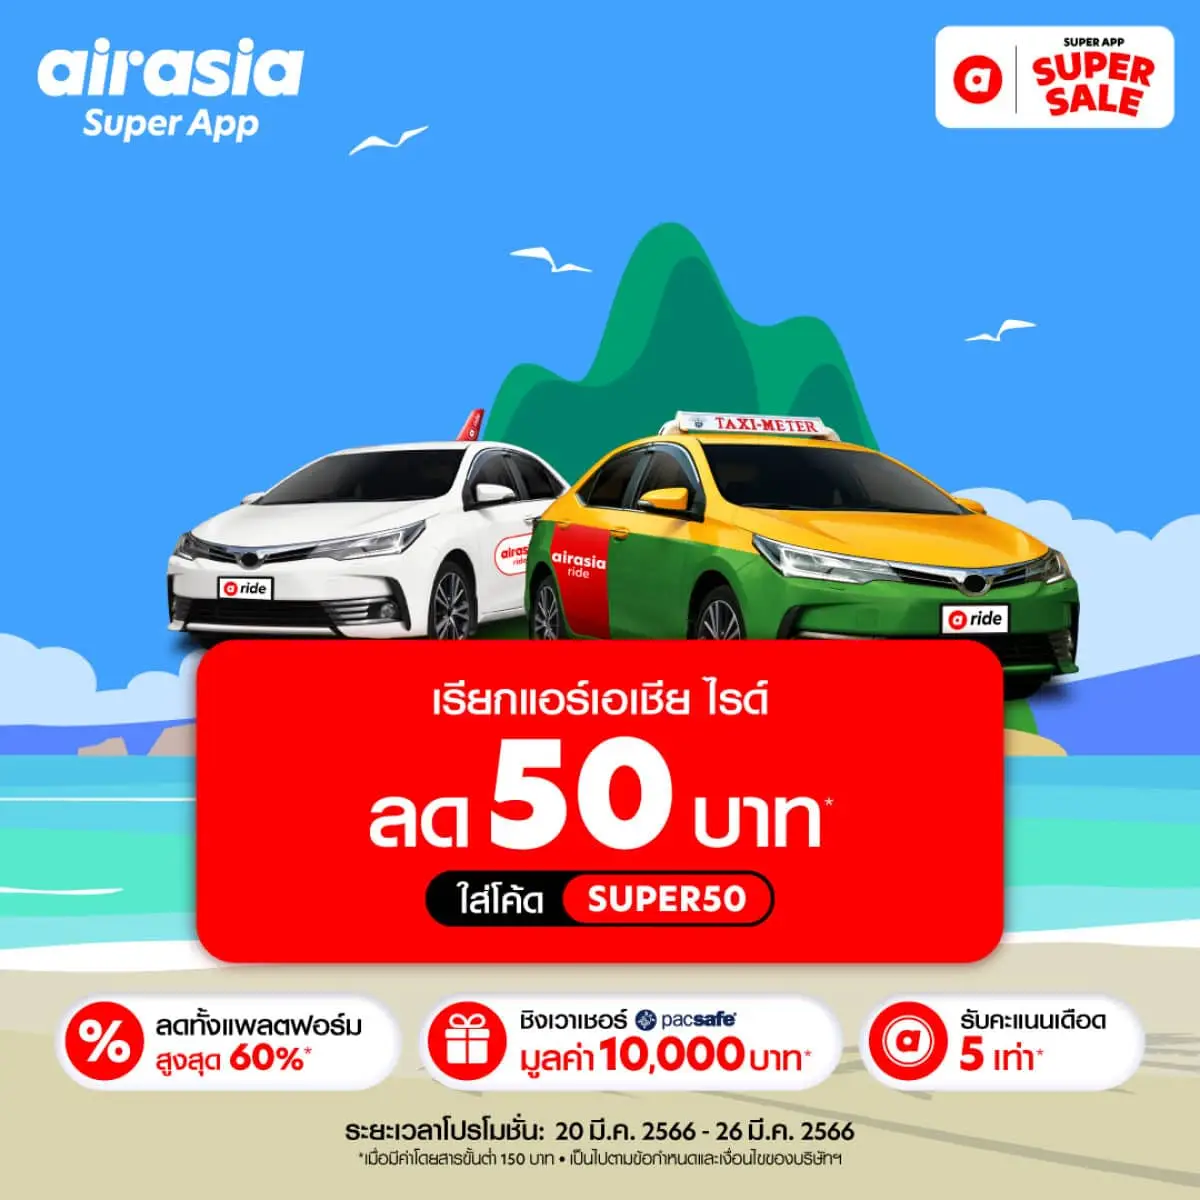 airasia Super Sale โปรฮอต ride